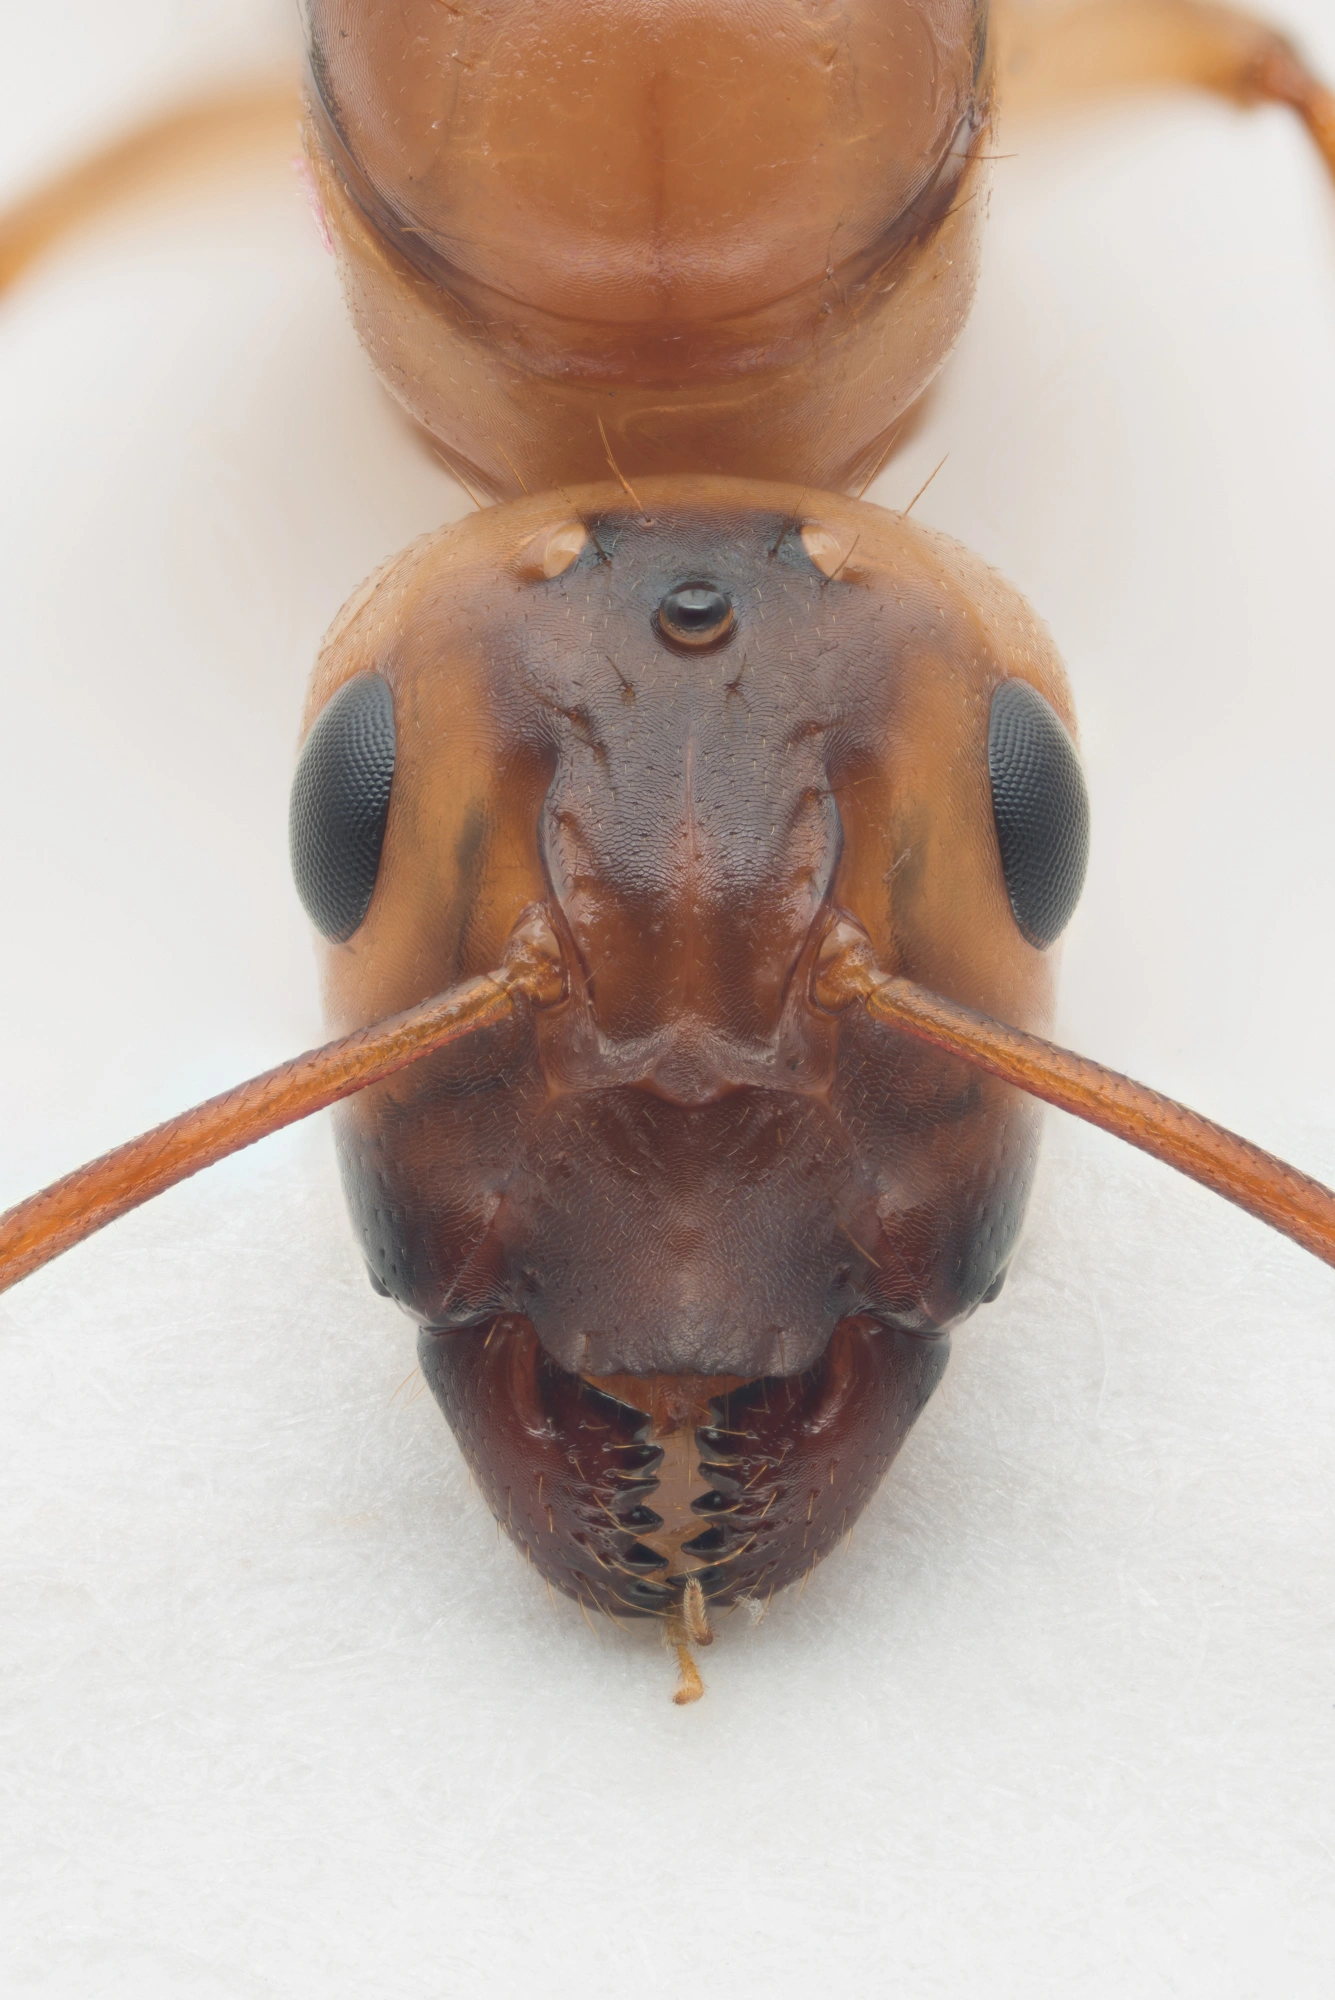 Stilkvepser: Camponotus ustus.